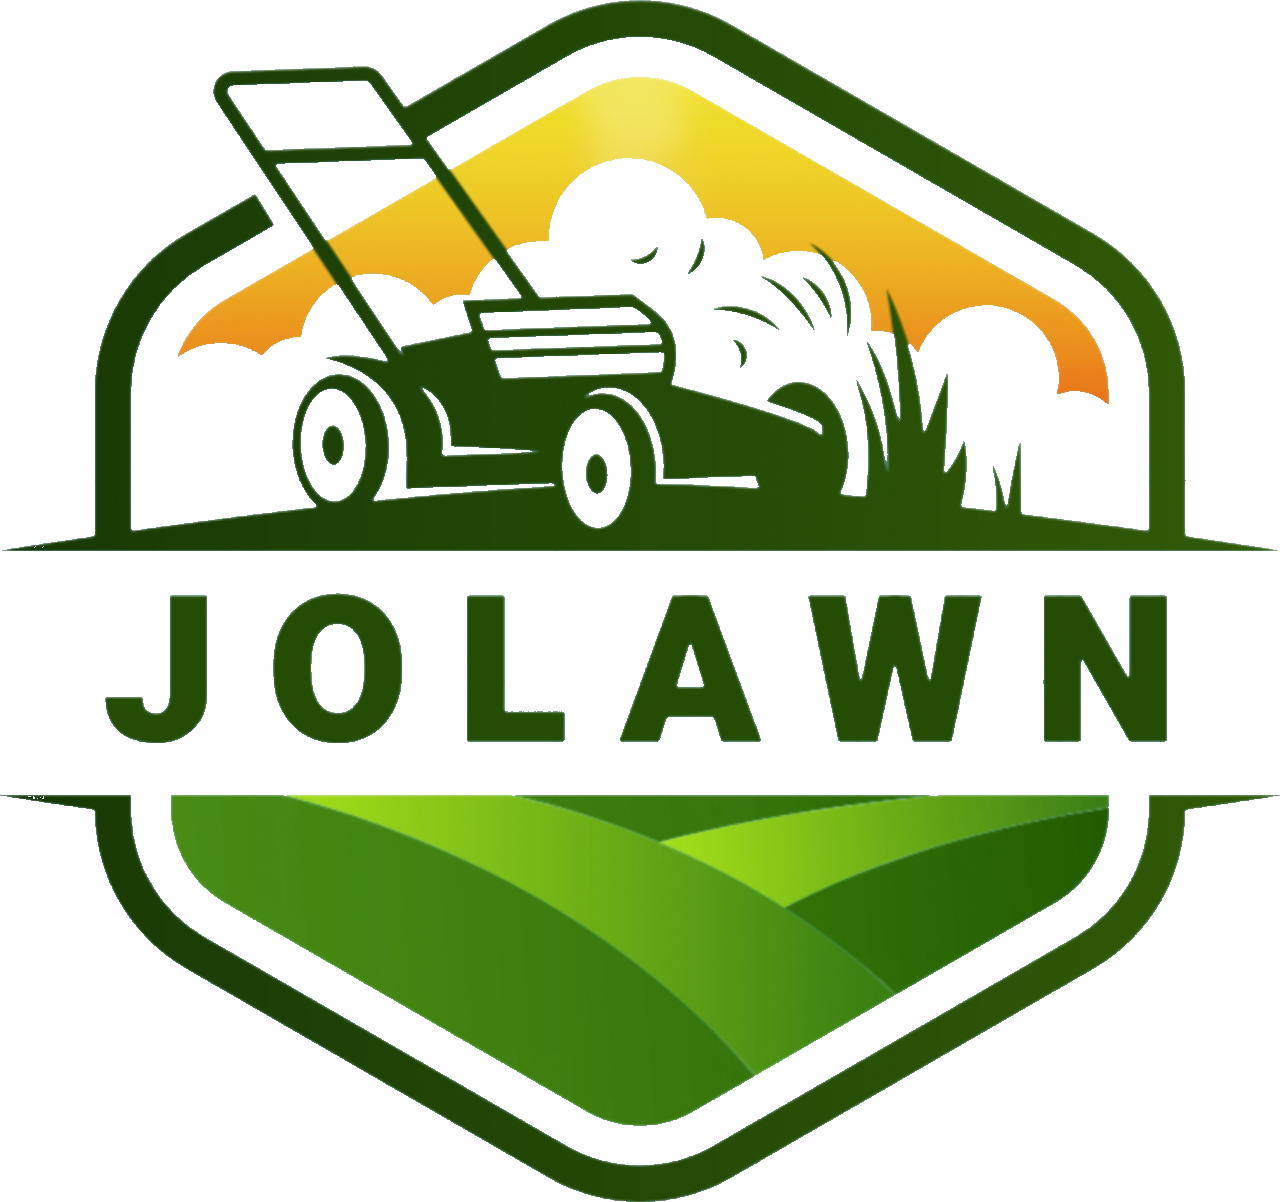 Jolawn.com 芝兰芝生™️